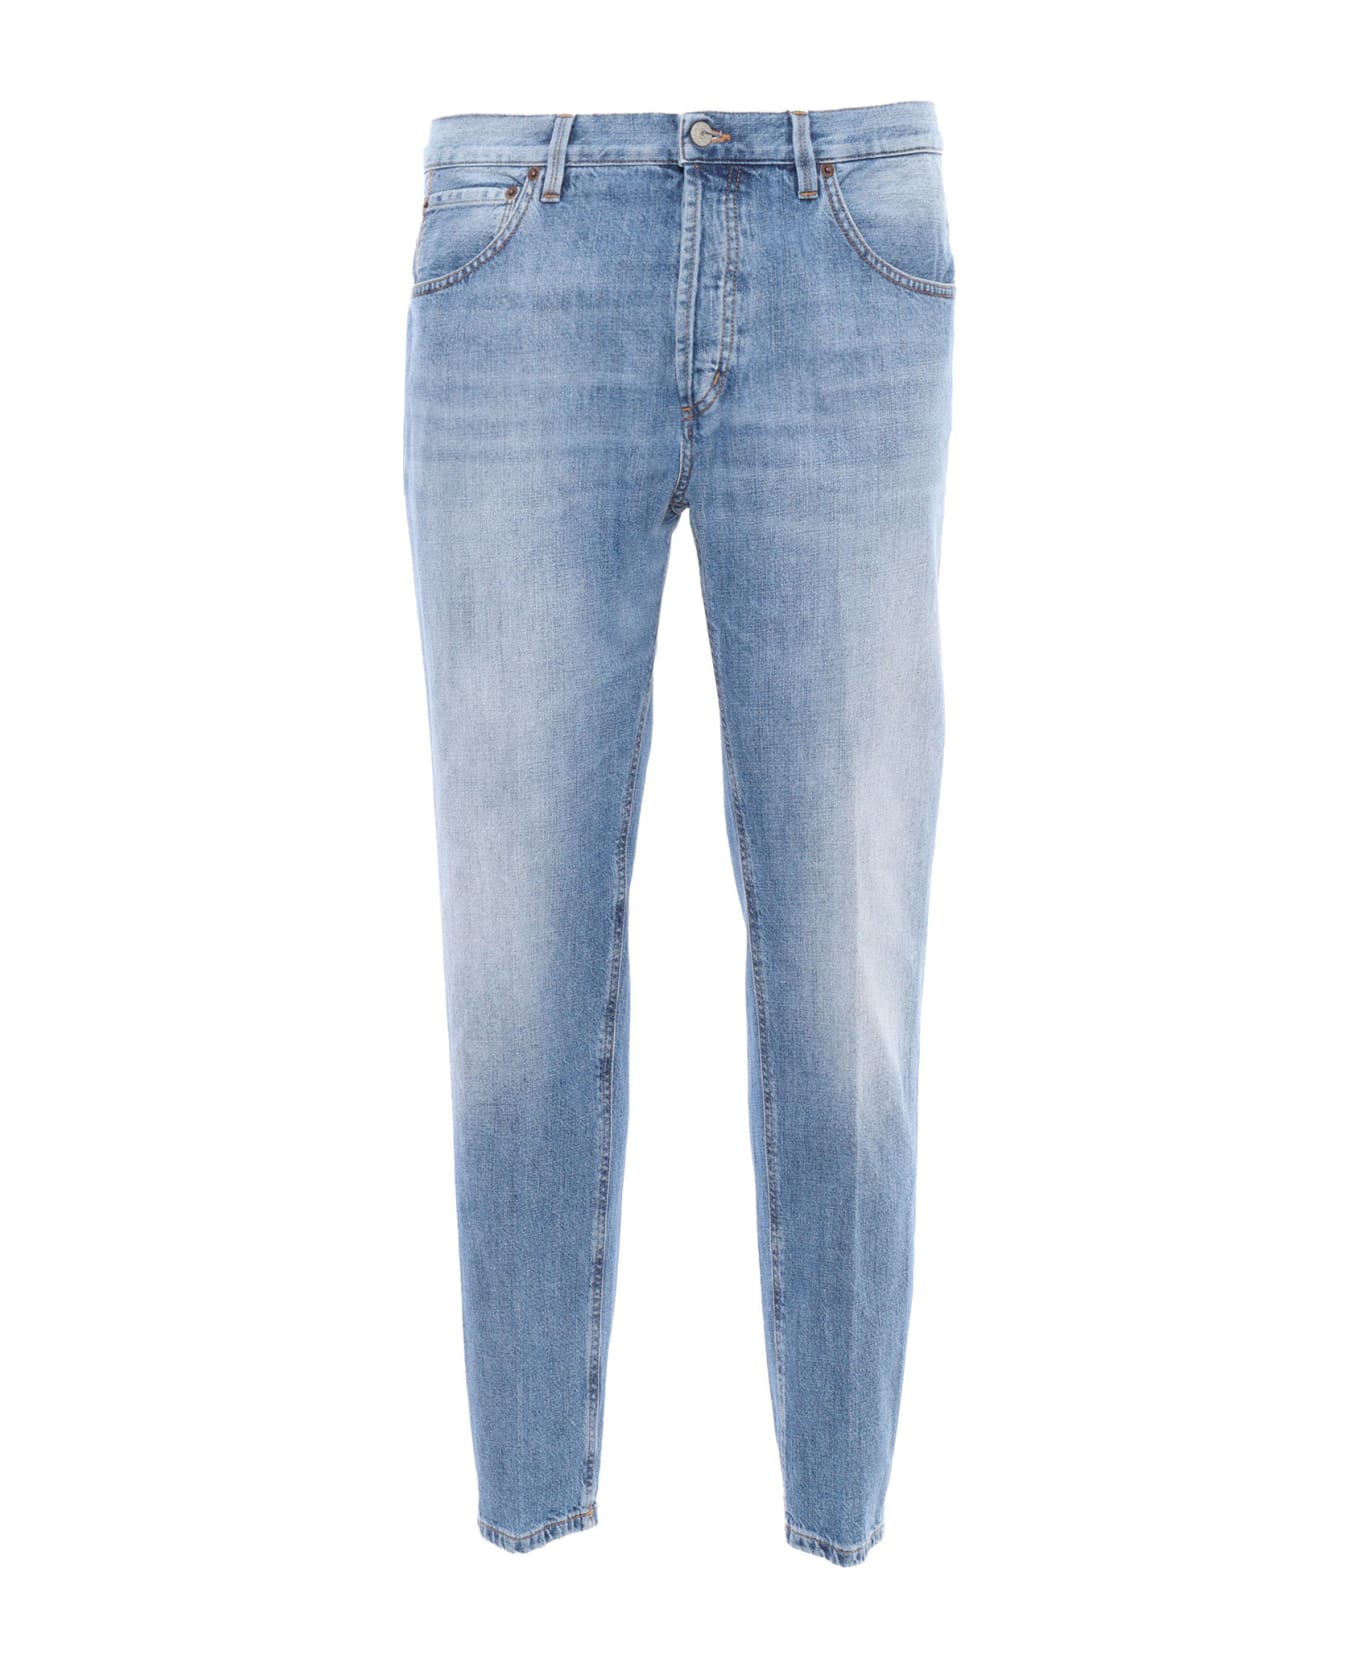 Dondup Washed Effect Jeans - Blu デニム